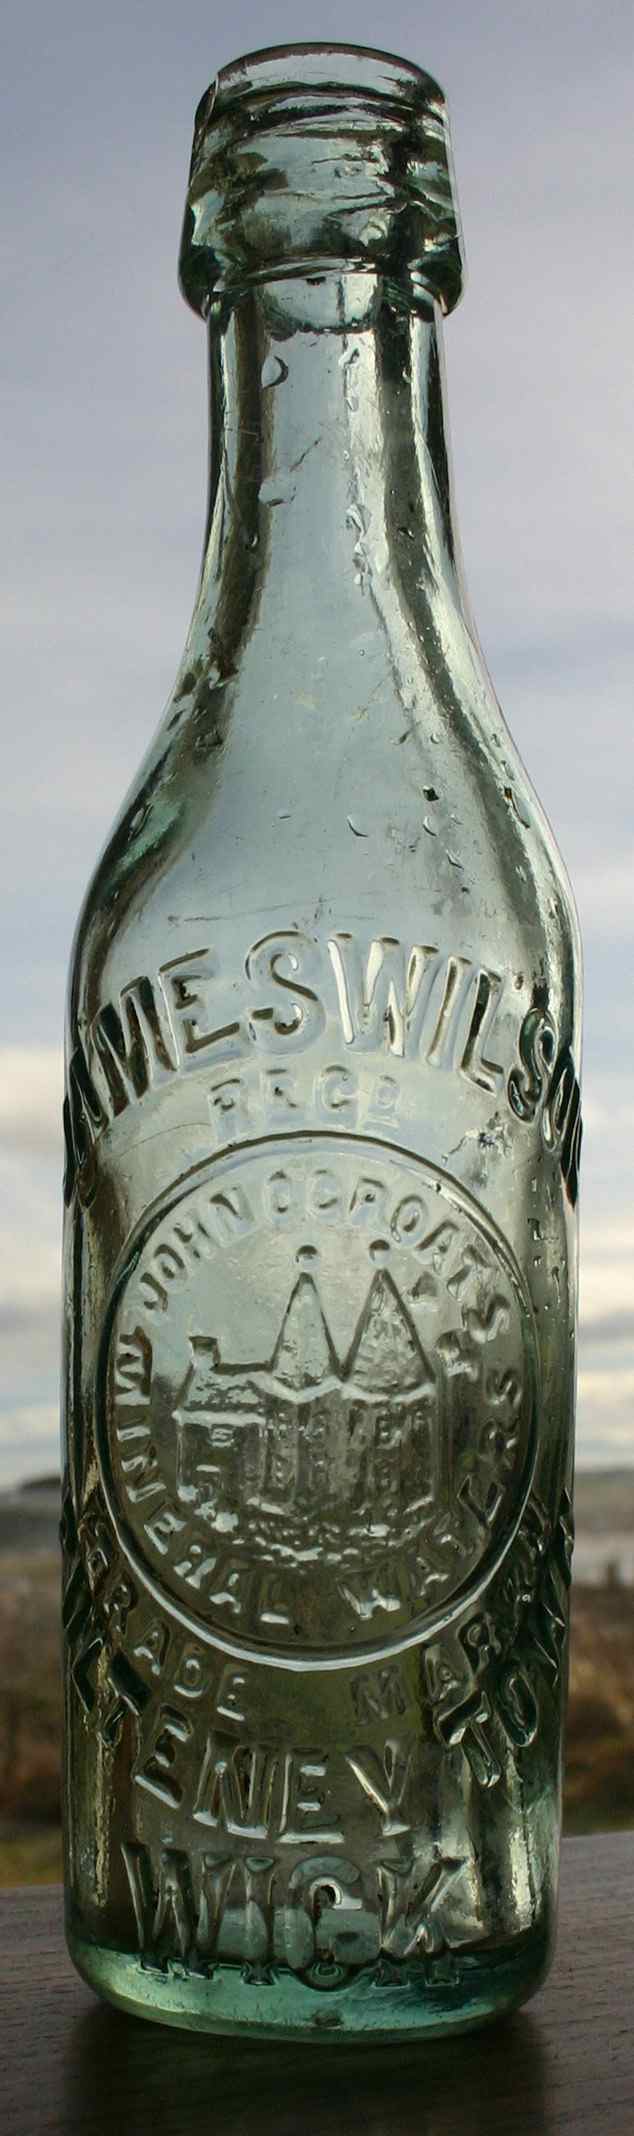 Photo: Old Bottle Found In A Caithness Garden